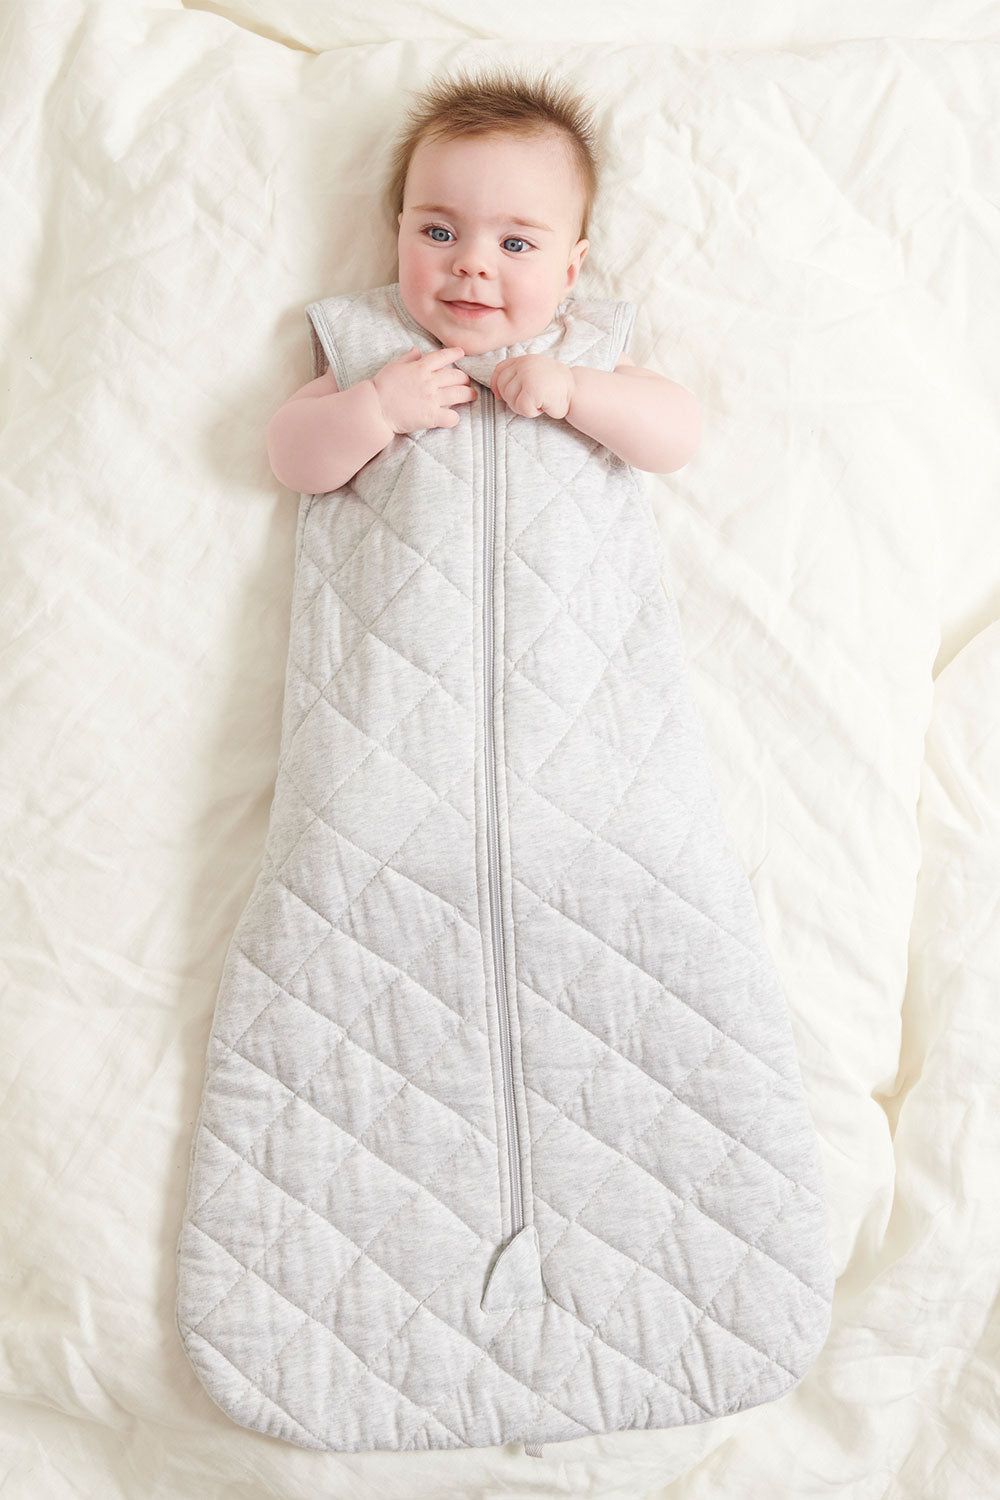 Buy Best Infant Sleeping Wrap Online – Urban Chase